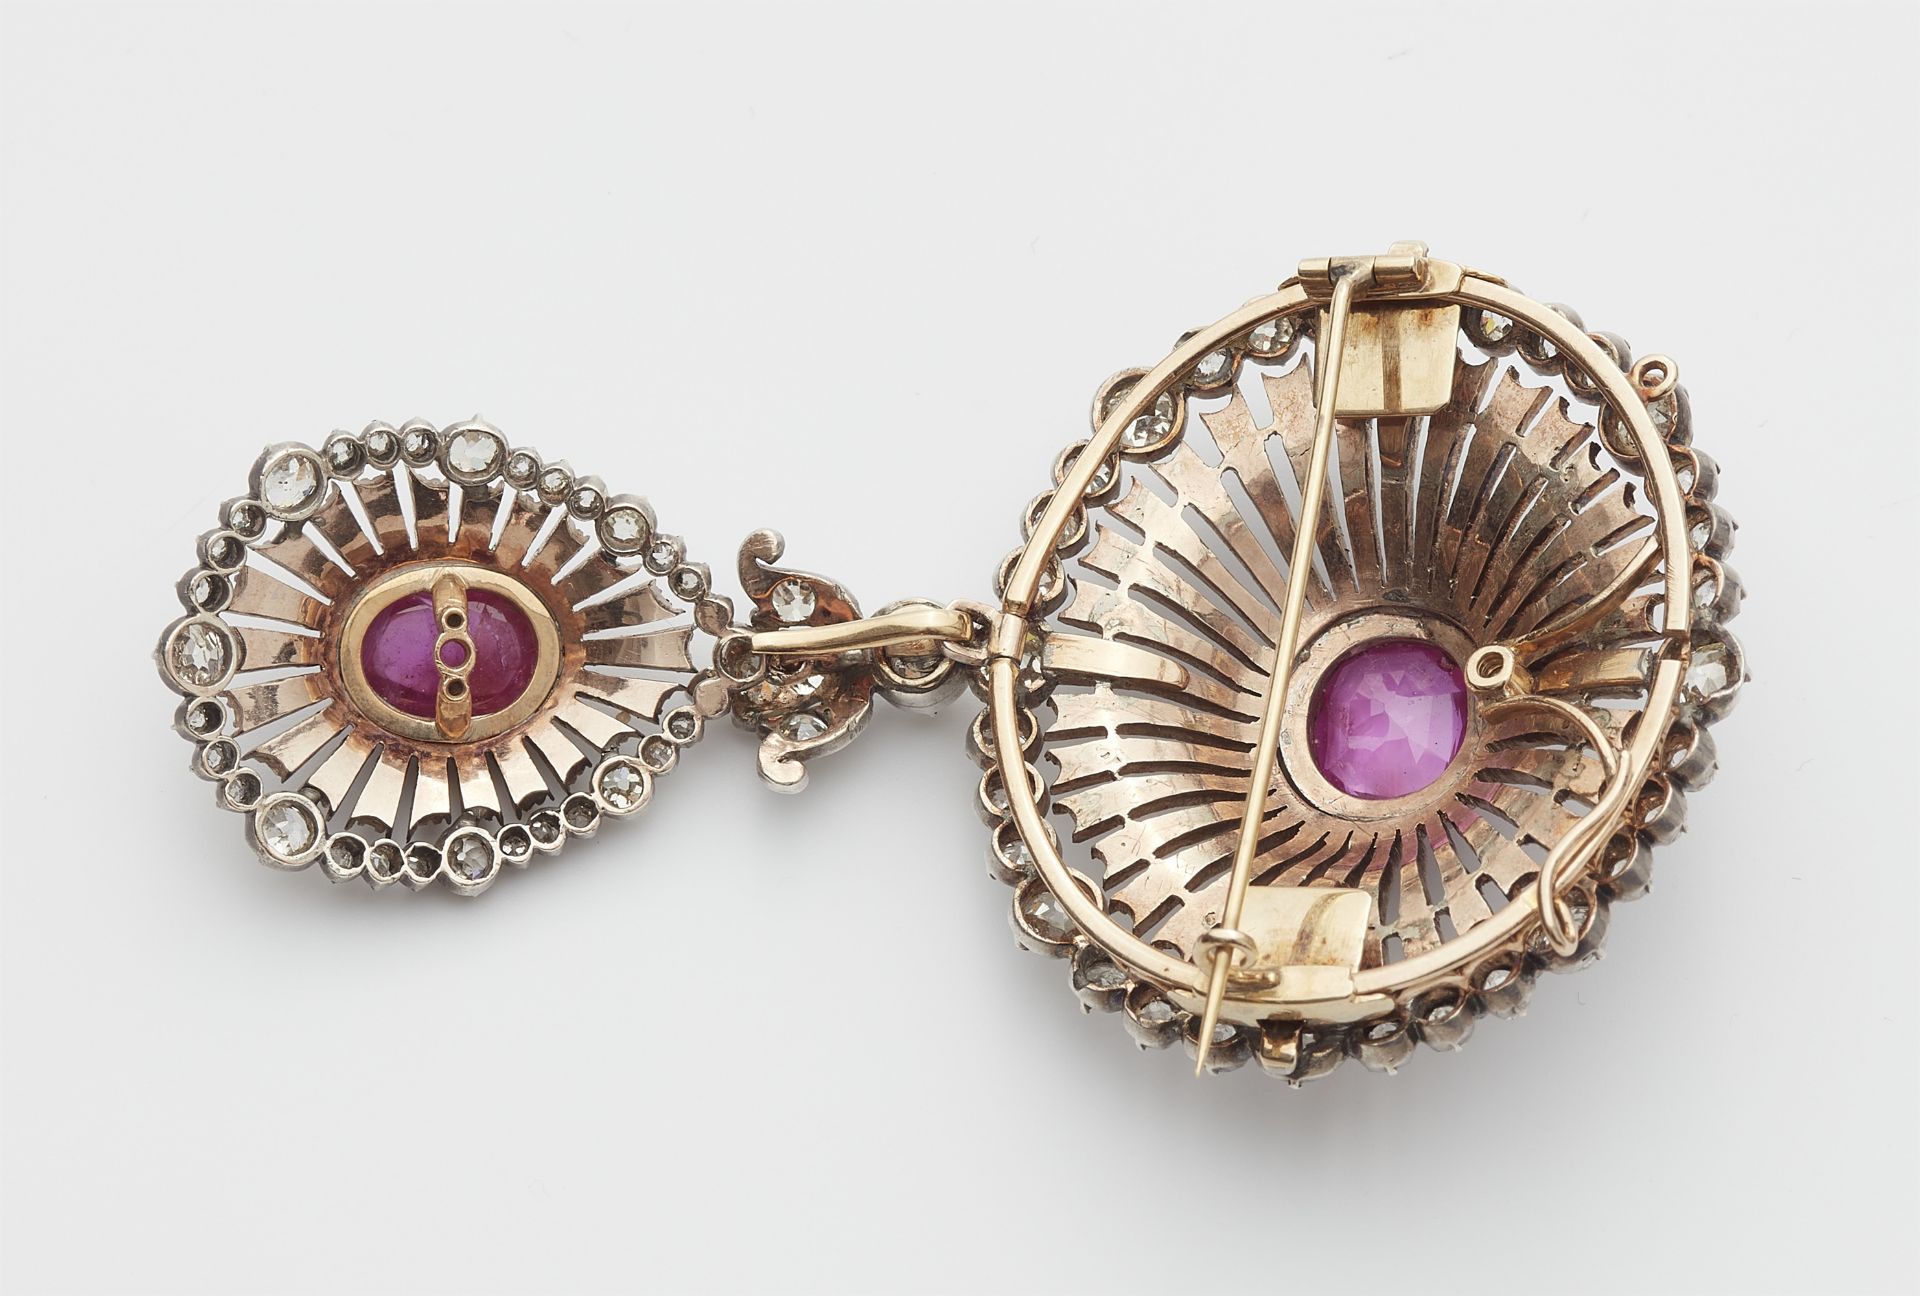 A 14k gold, diamond and Burma ruby pendant brooch. - Image 2 of 2